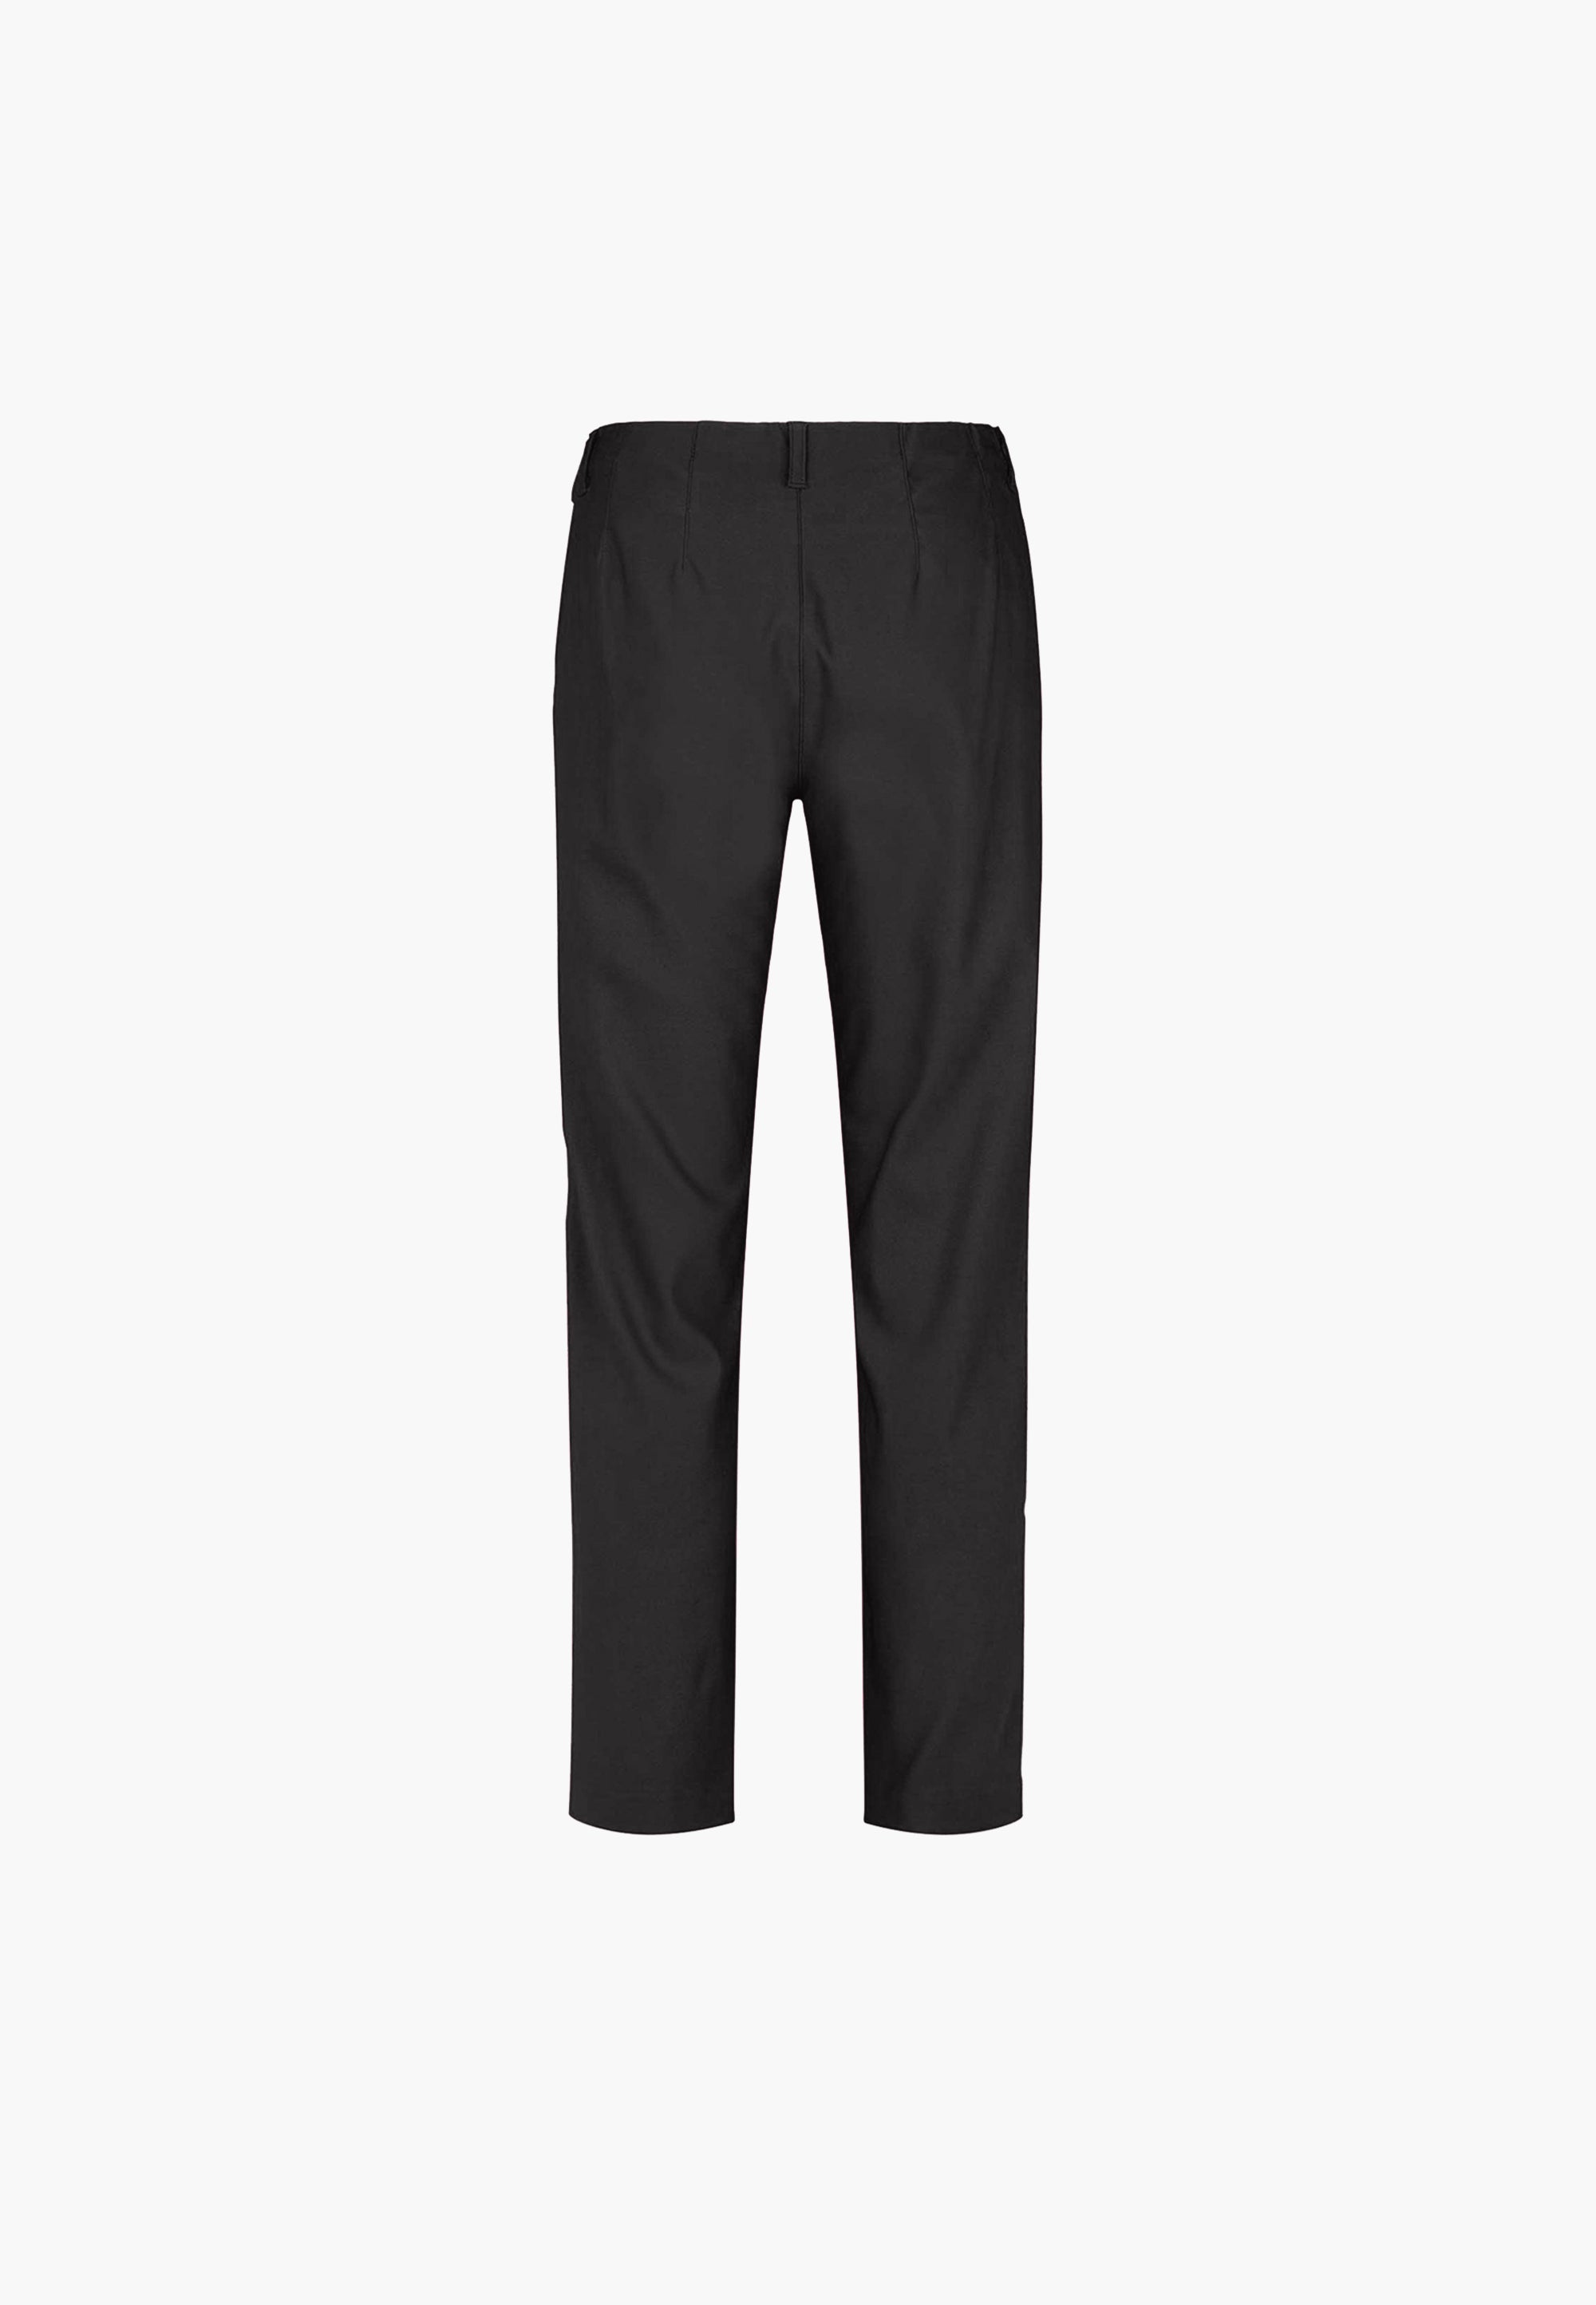 LAURIE  Taylor Regular - Medium Length Trousers REGULAR 99000 Black